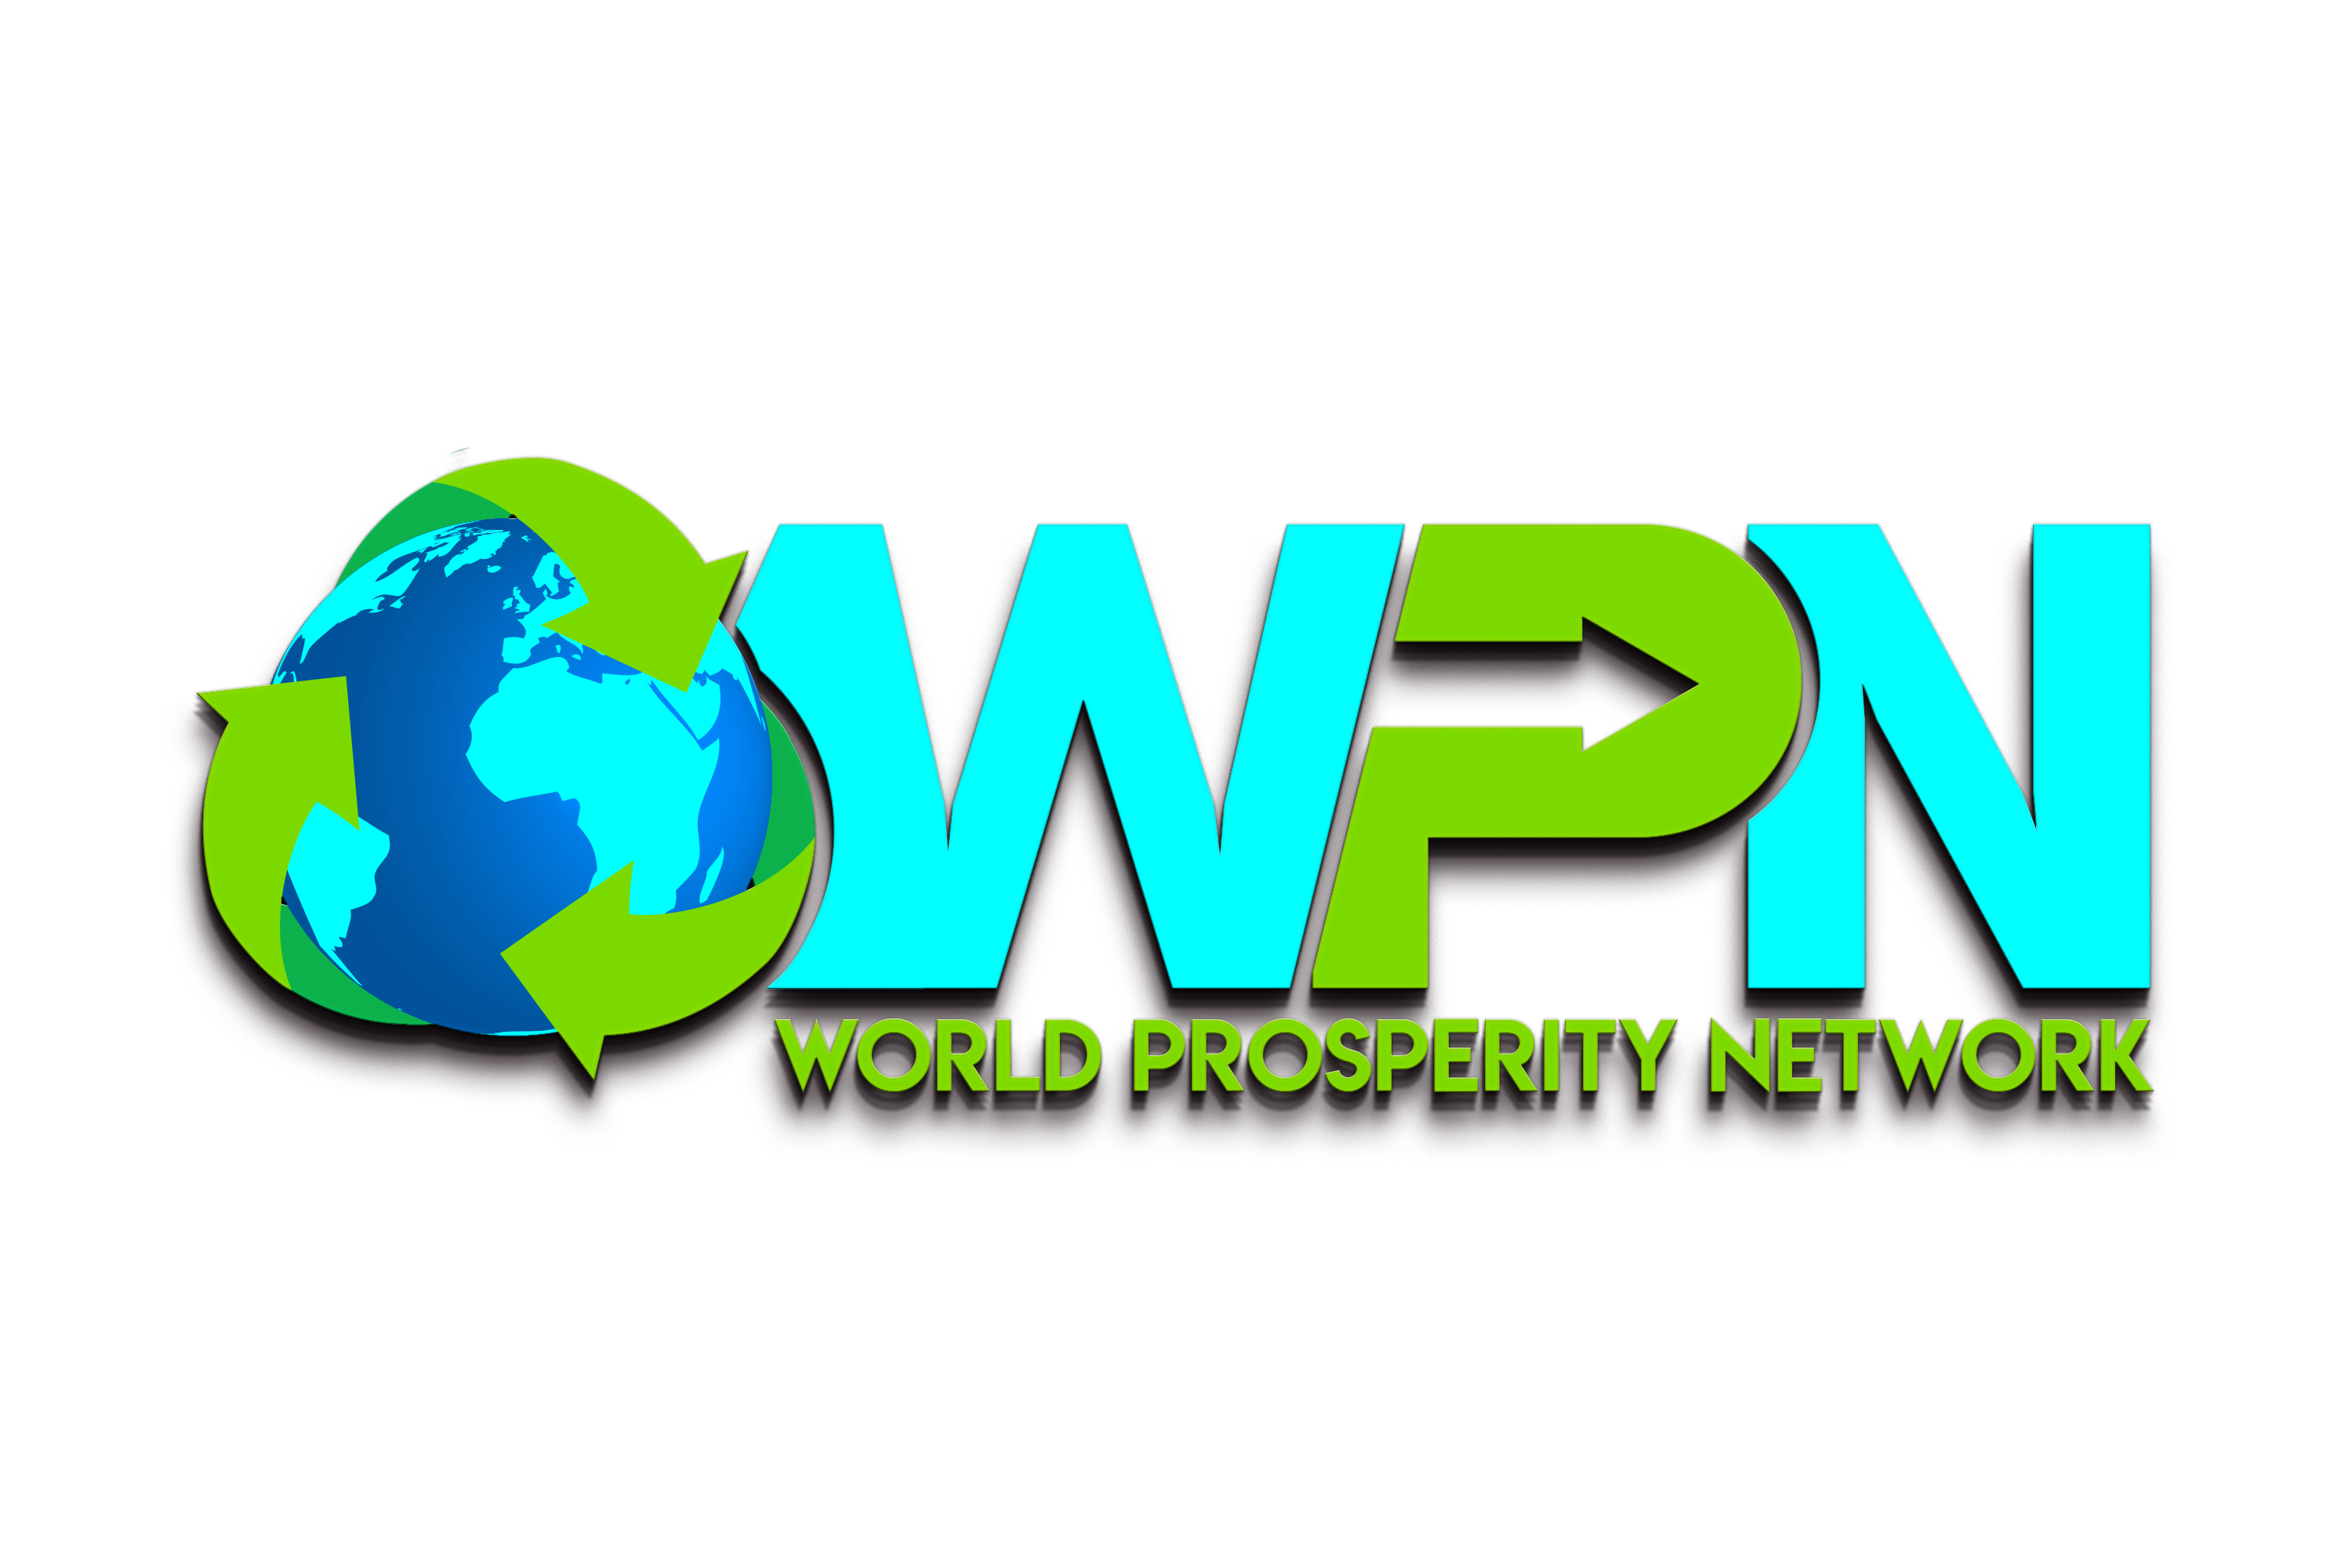 World Prosperity Network